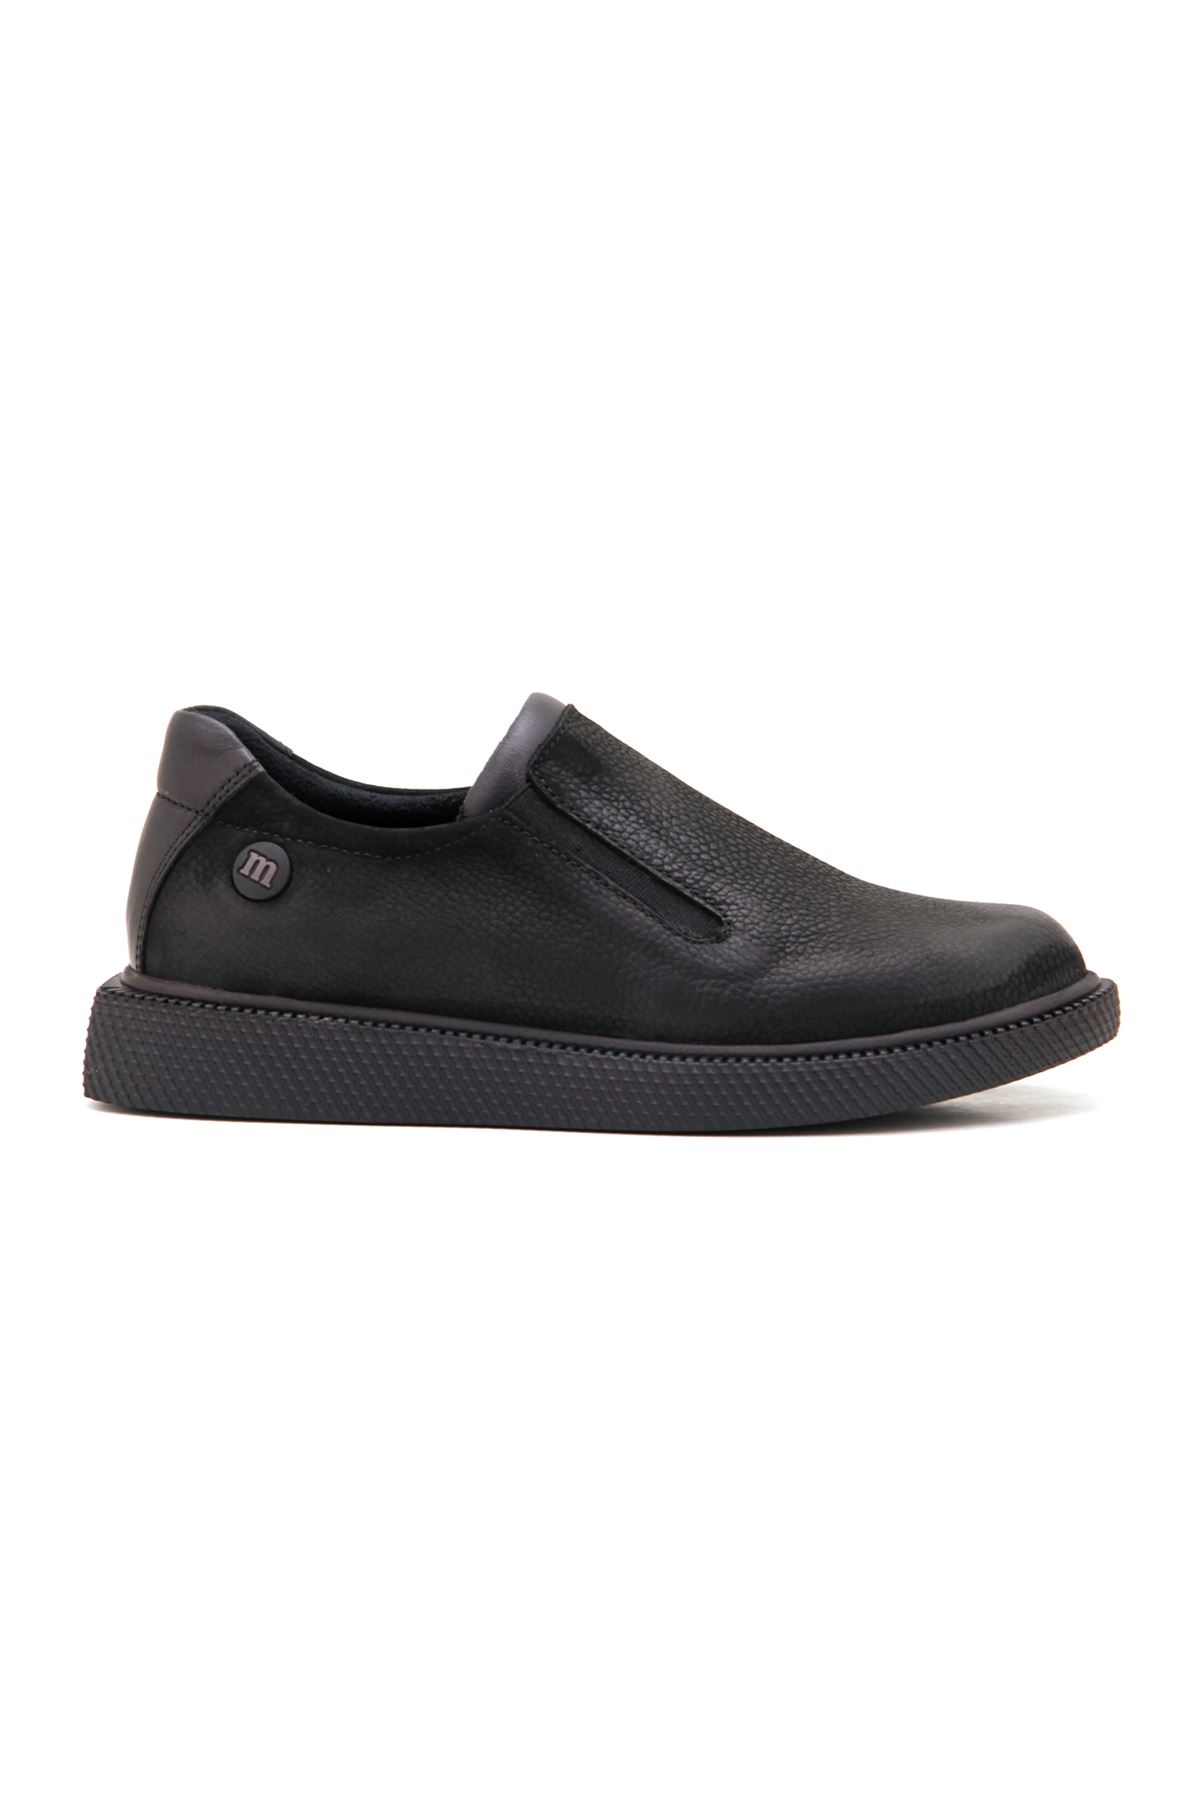 Mammamia D22KA-3070 Hakiki Deri Kadın Ayakkabı - Siyah Nubuk